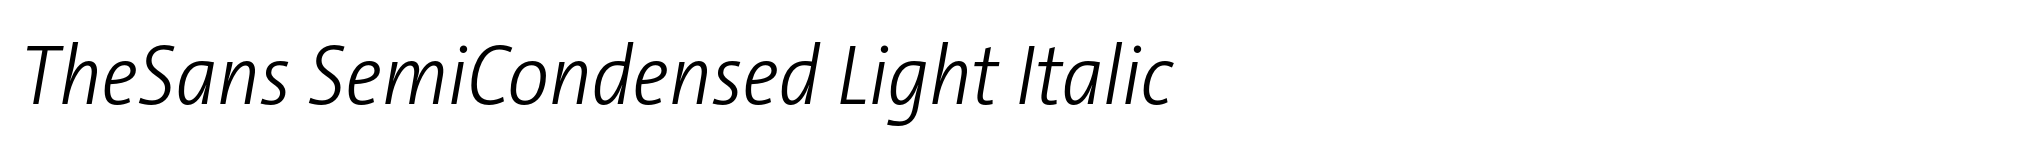 TheSans SemiCondensed Light Italic image